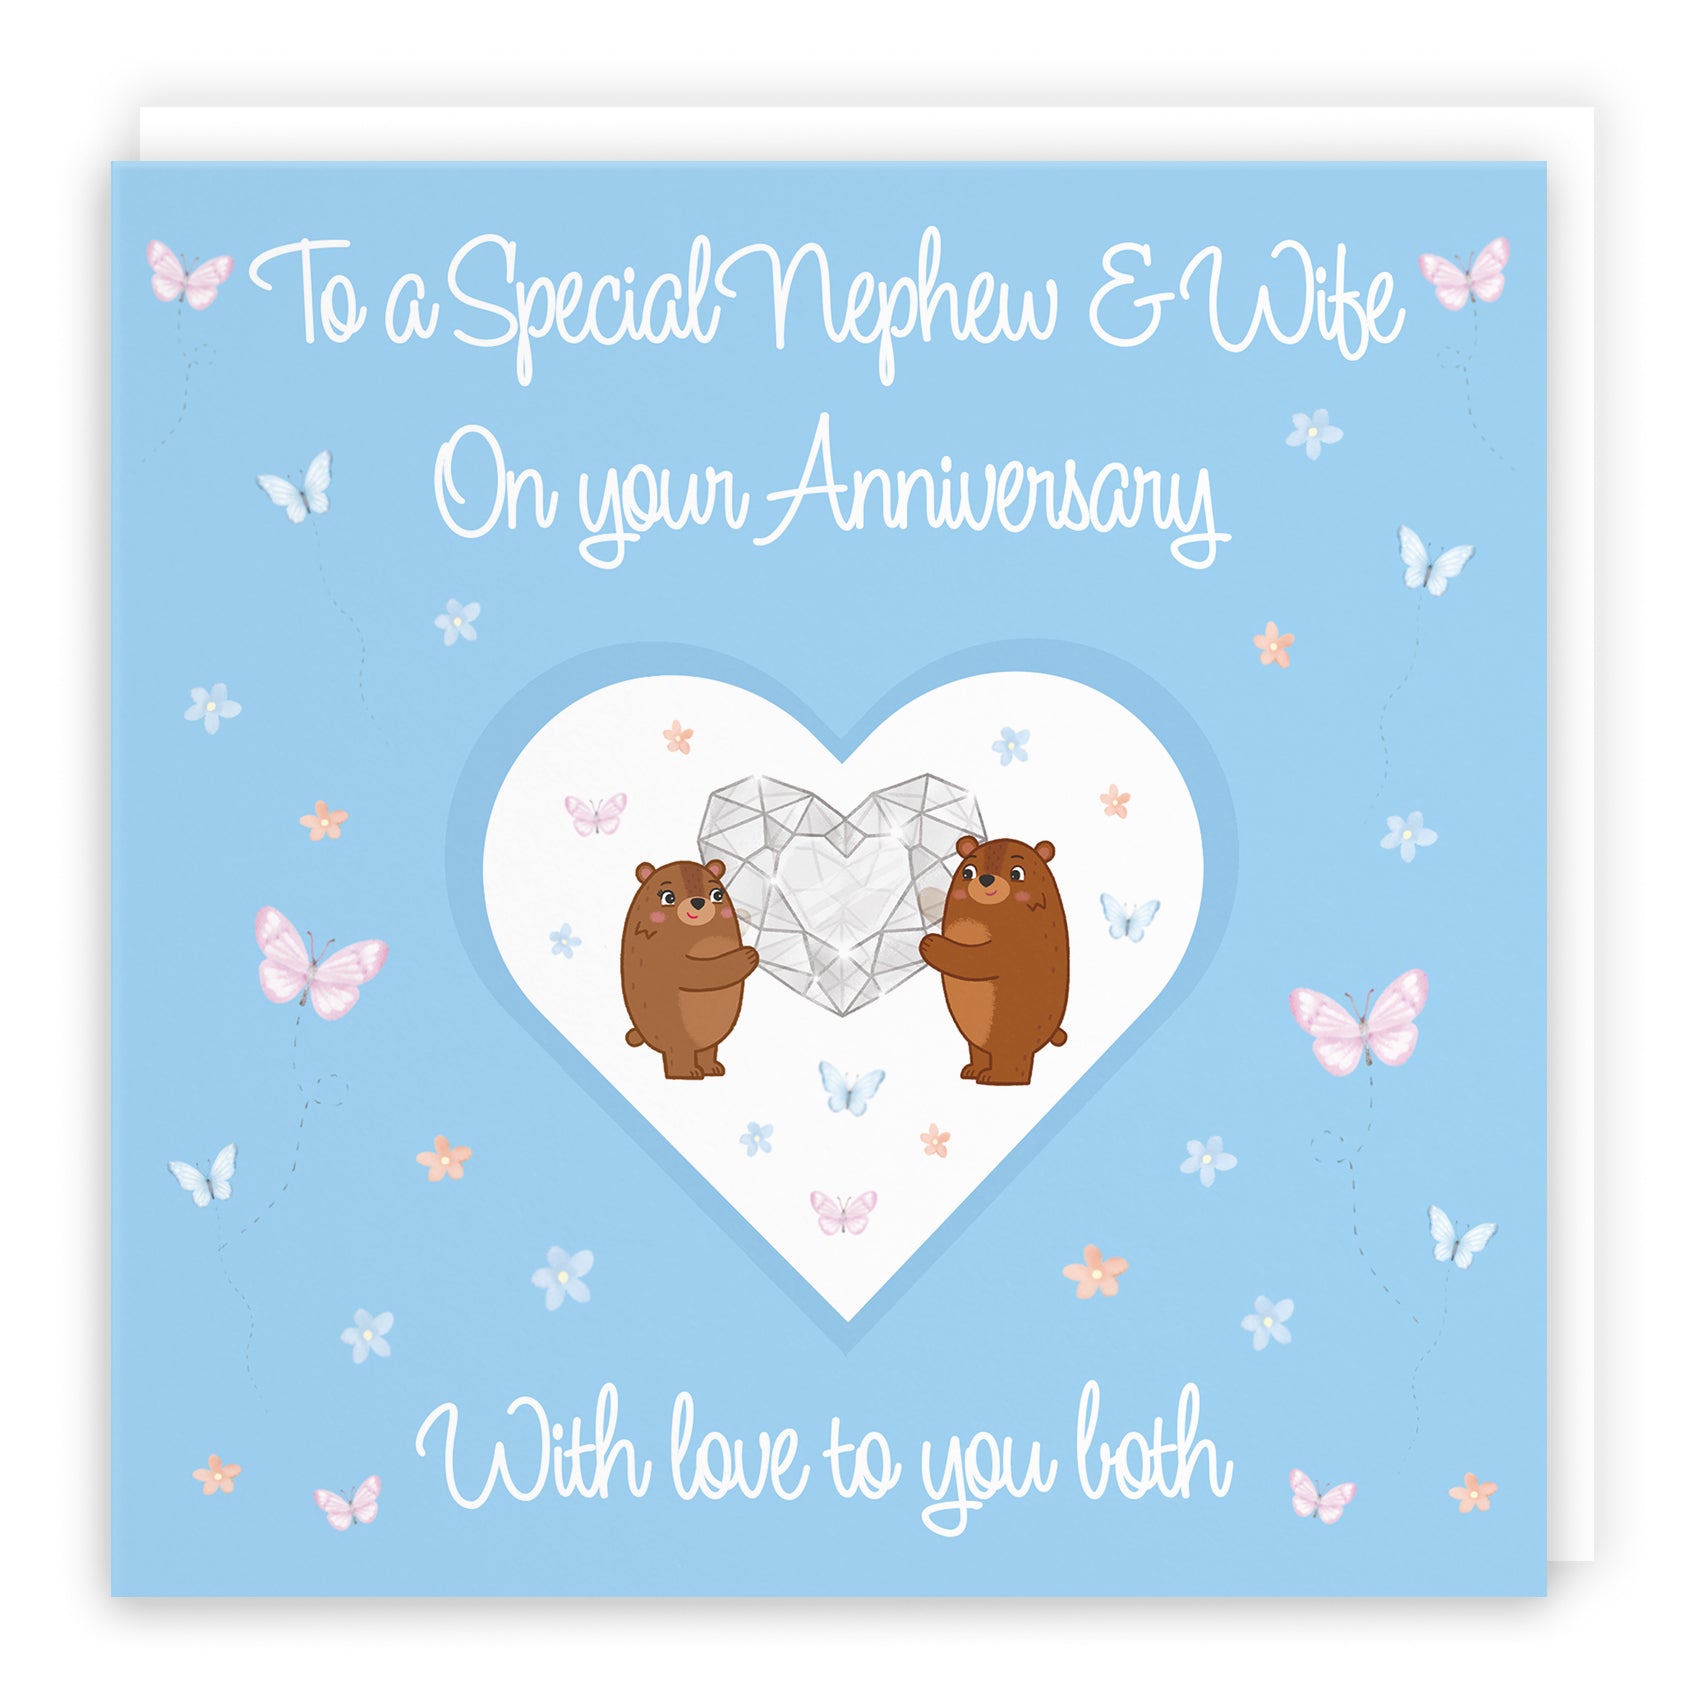 Nephew And Wife Anniversary Card Romantic Meadows